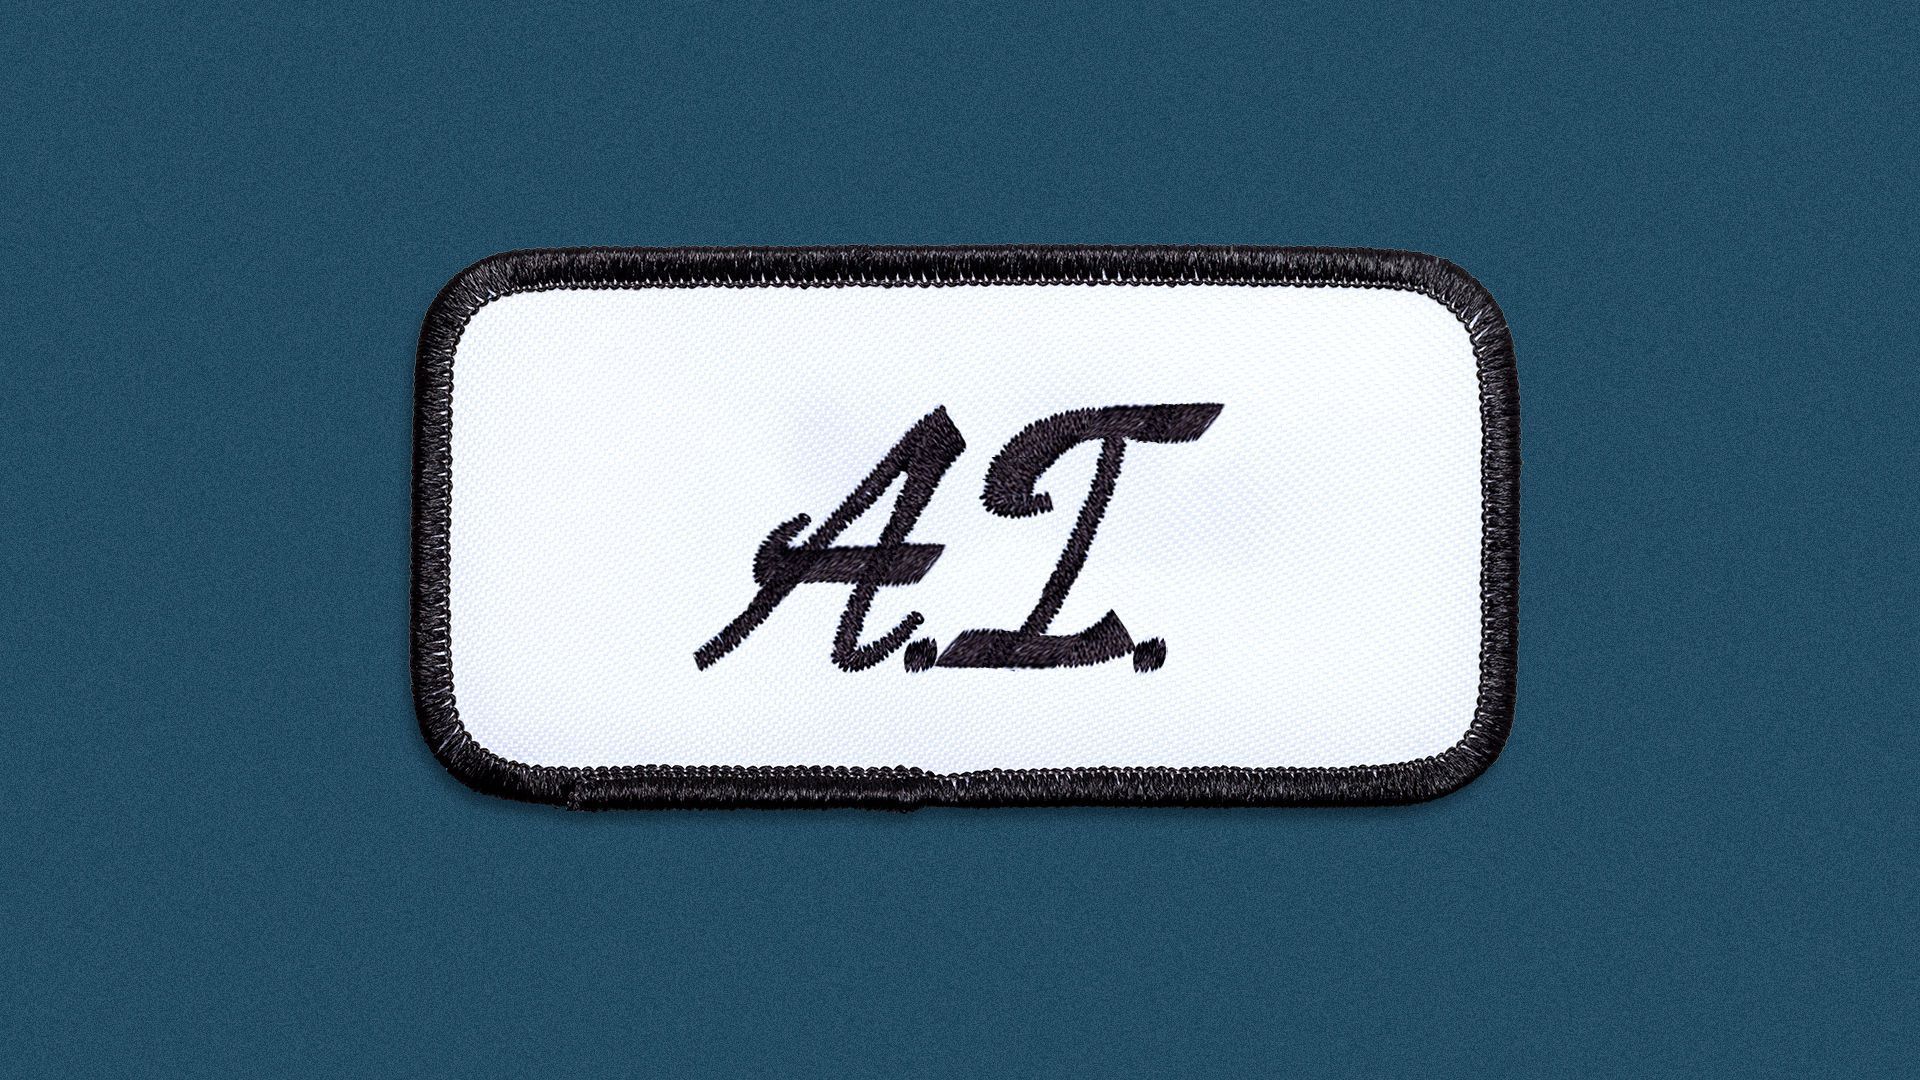 Illustration of a name badge reading "A.I."